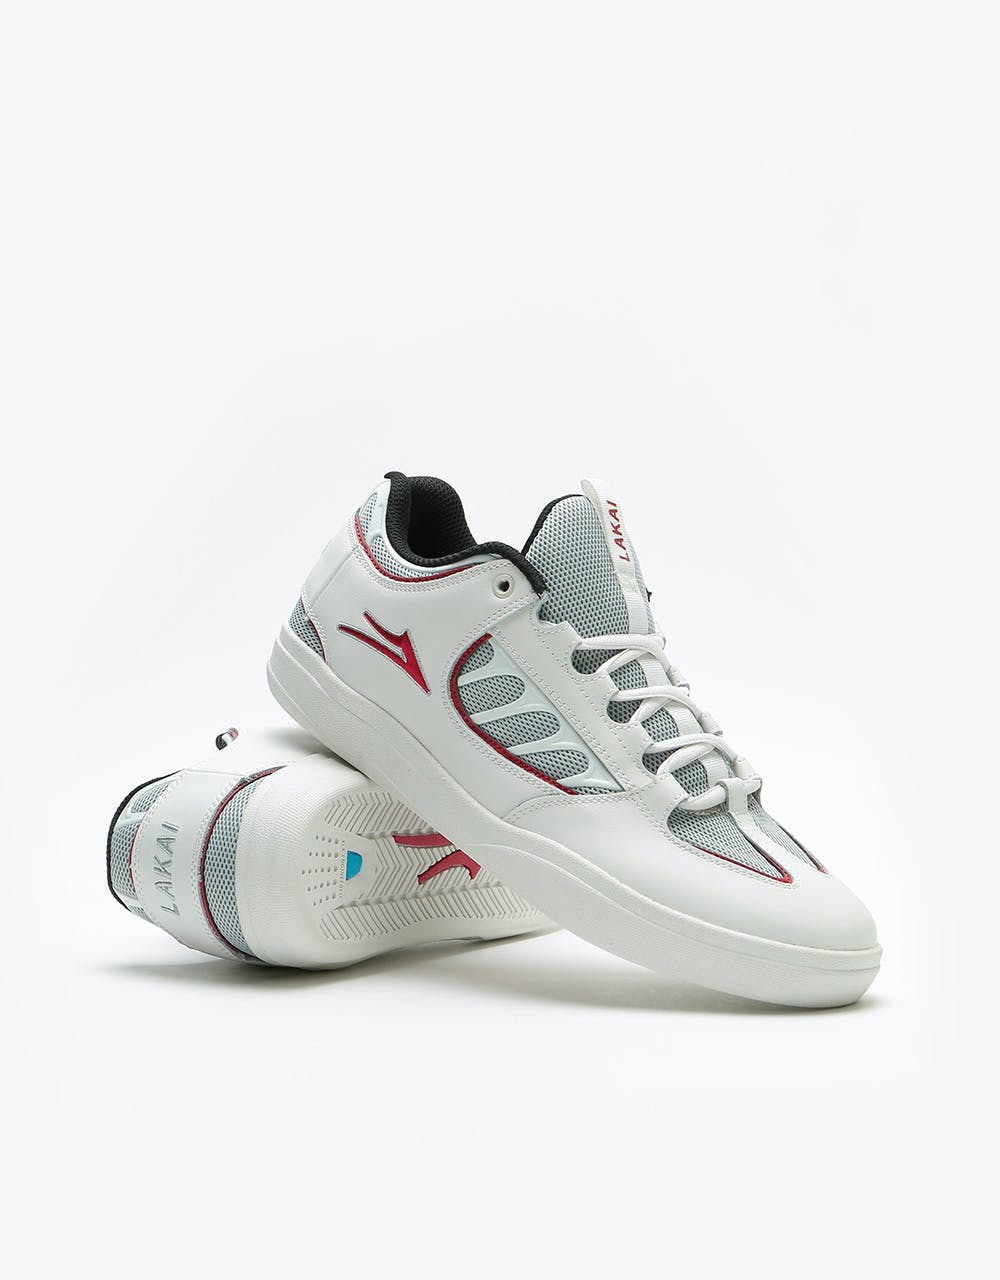 Lakai Carroll Skate Shoes - White Leather